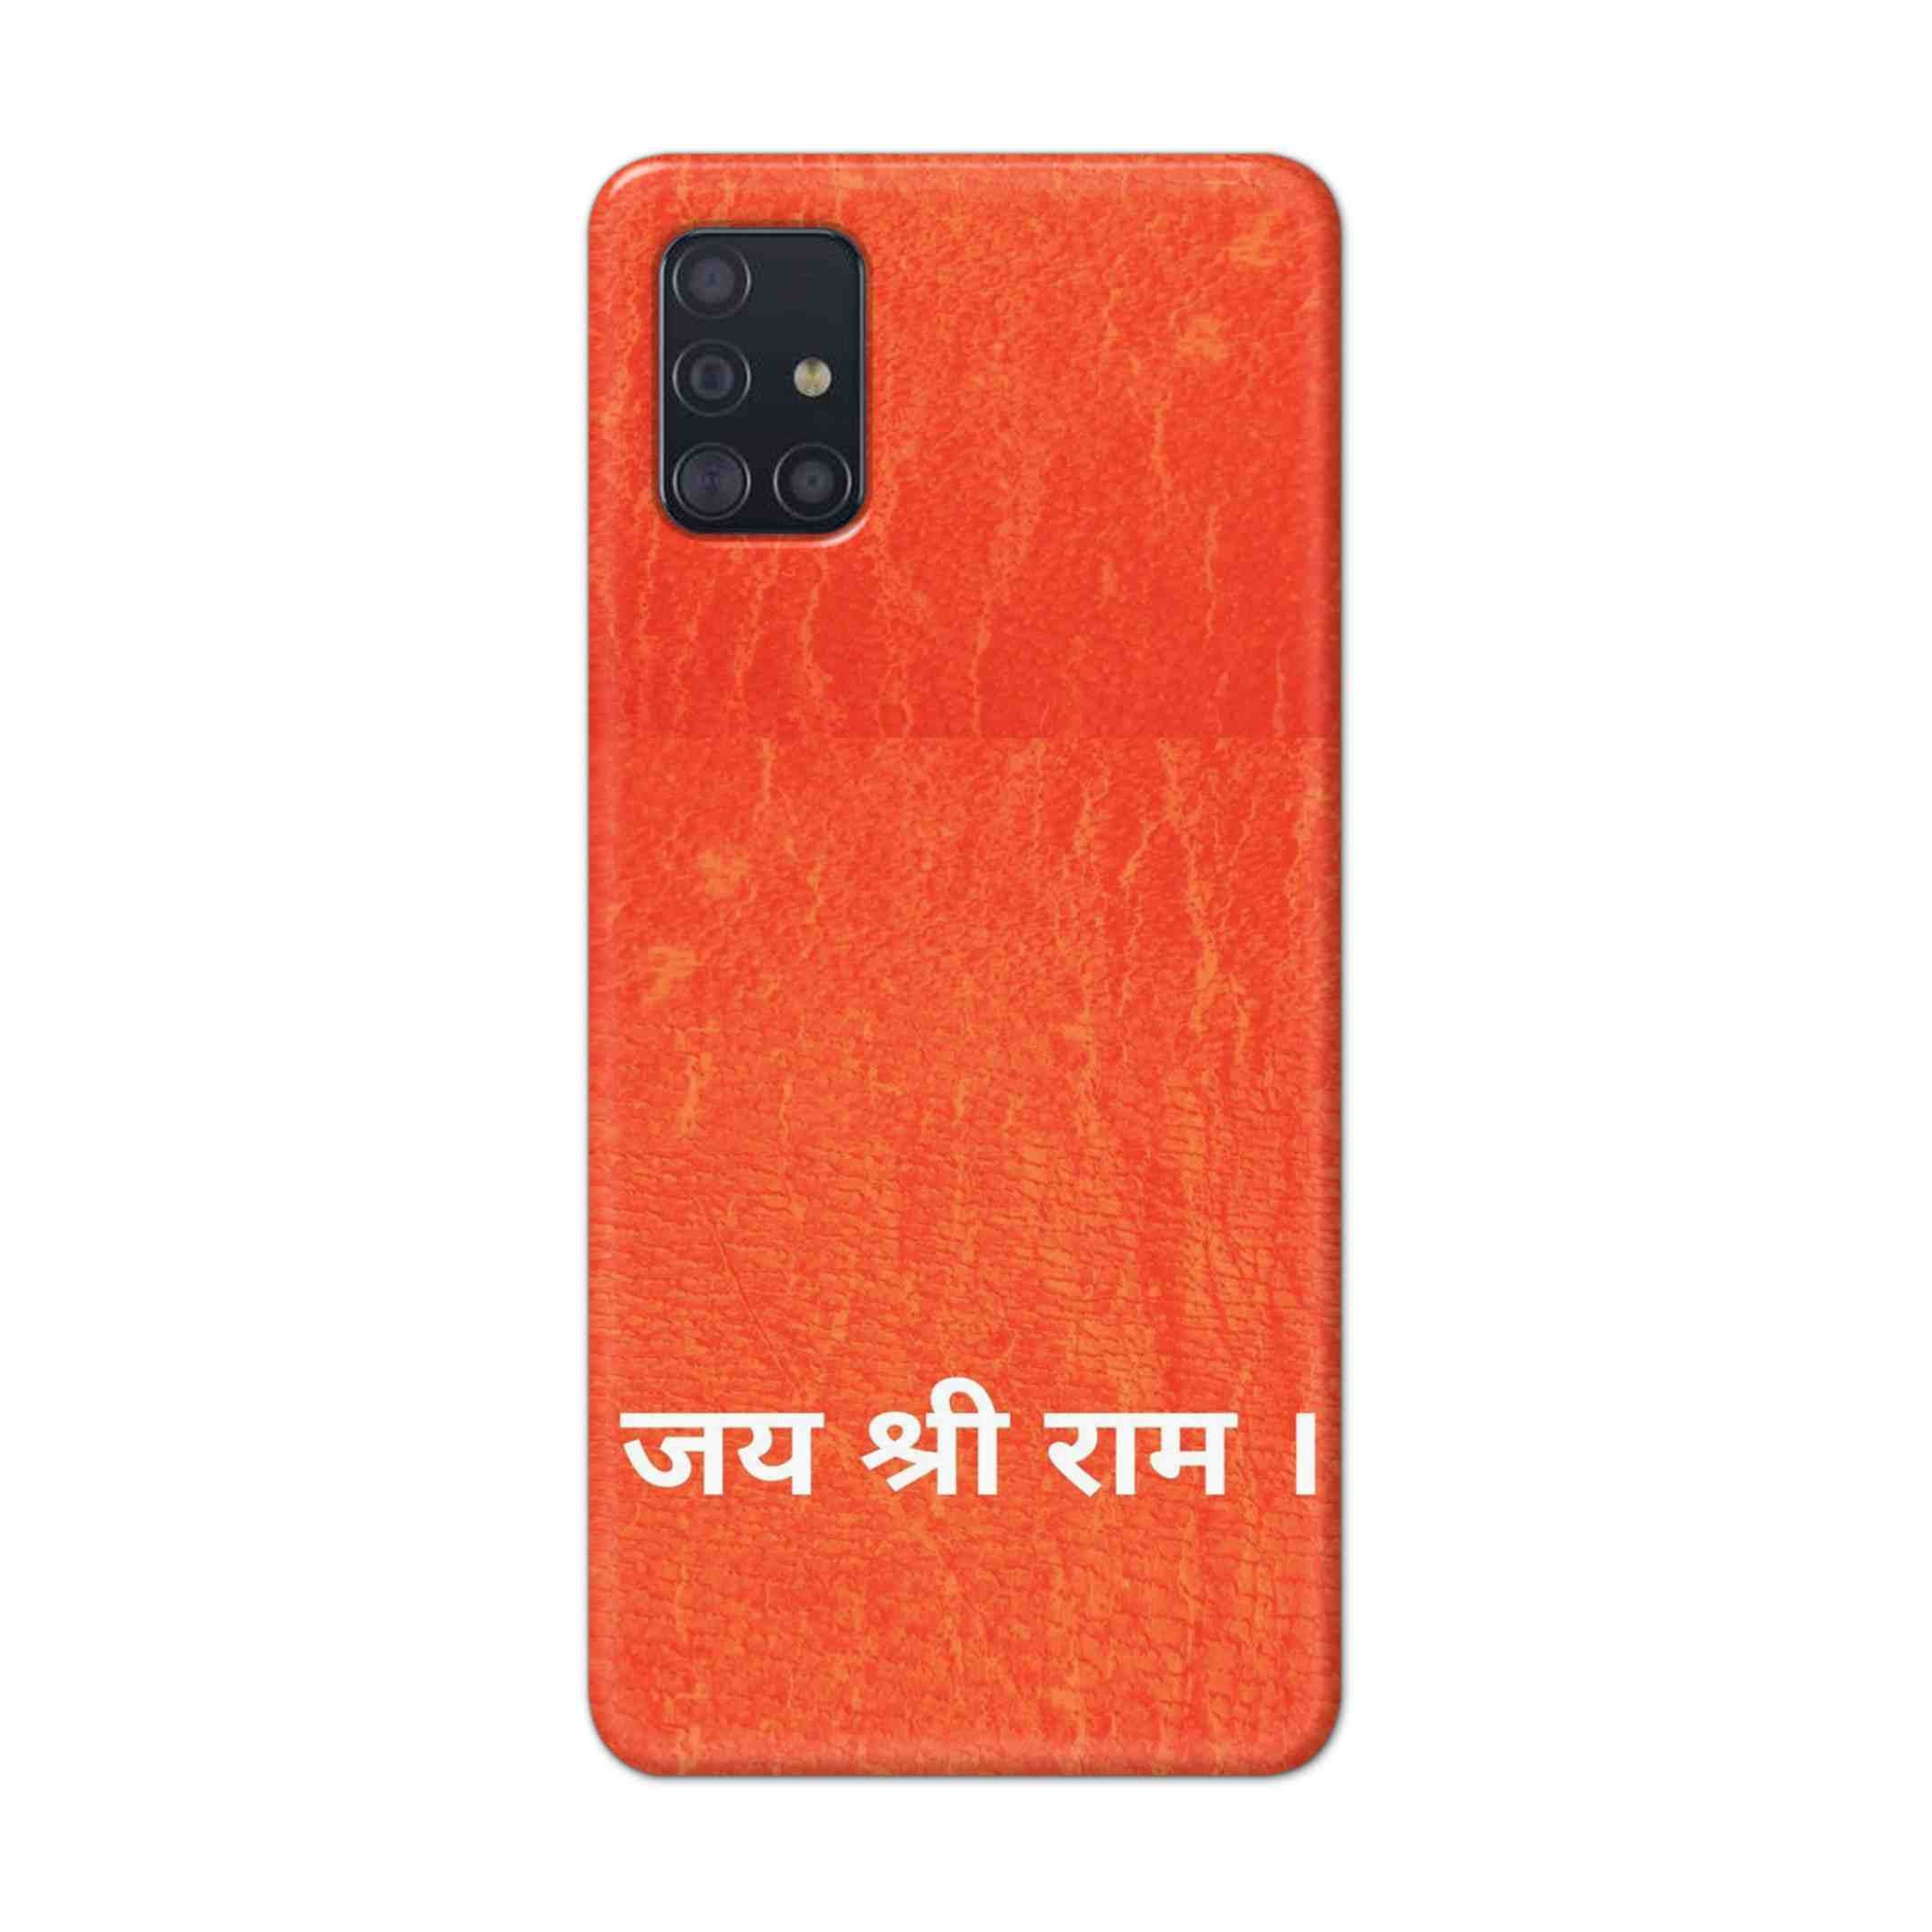 Buy Jai Shree Ram Hard Back Mobile Phone Case Cover For Samsung Galaxy M31s Online